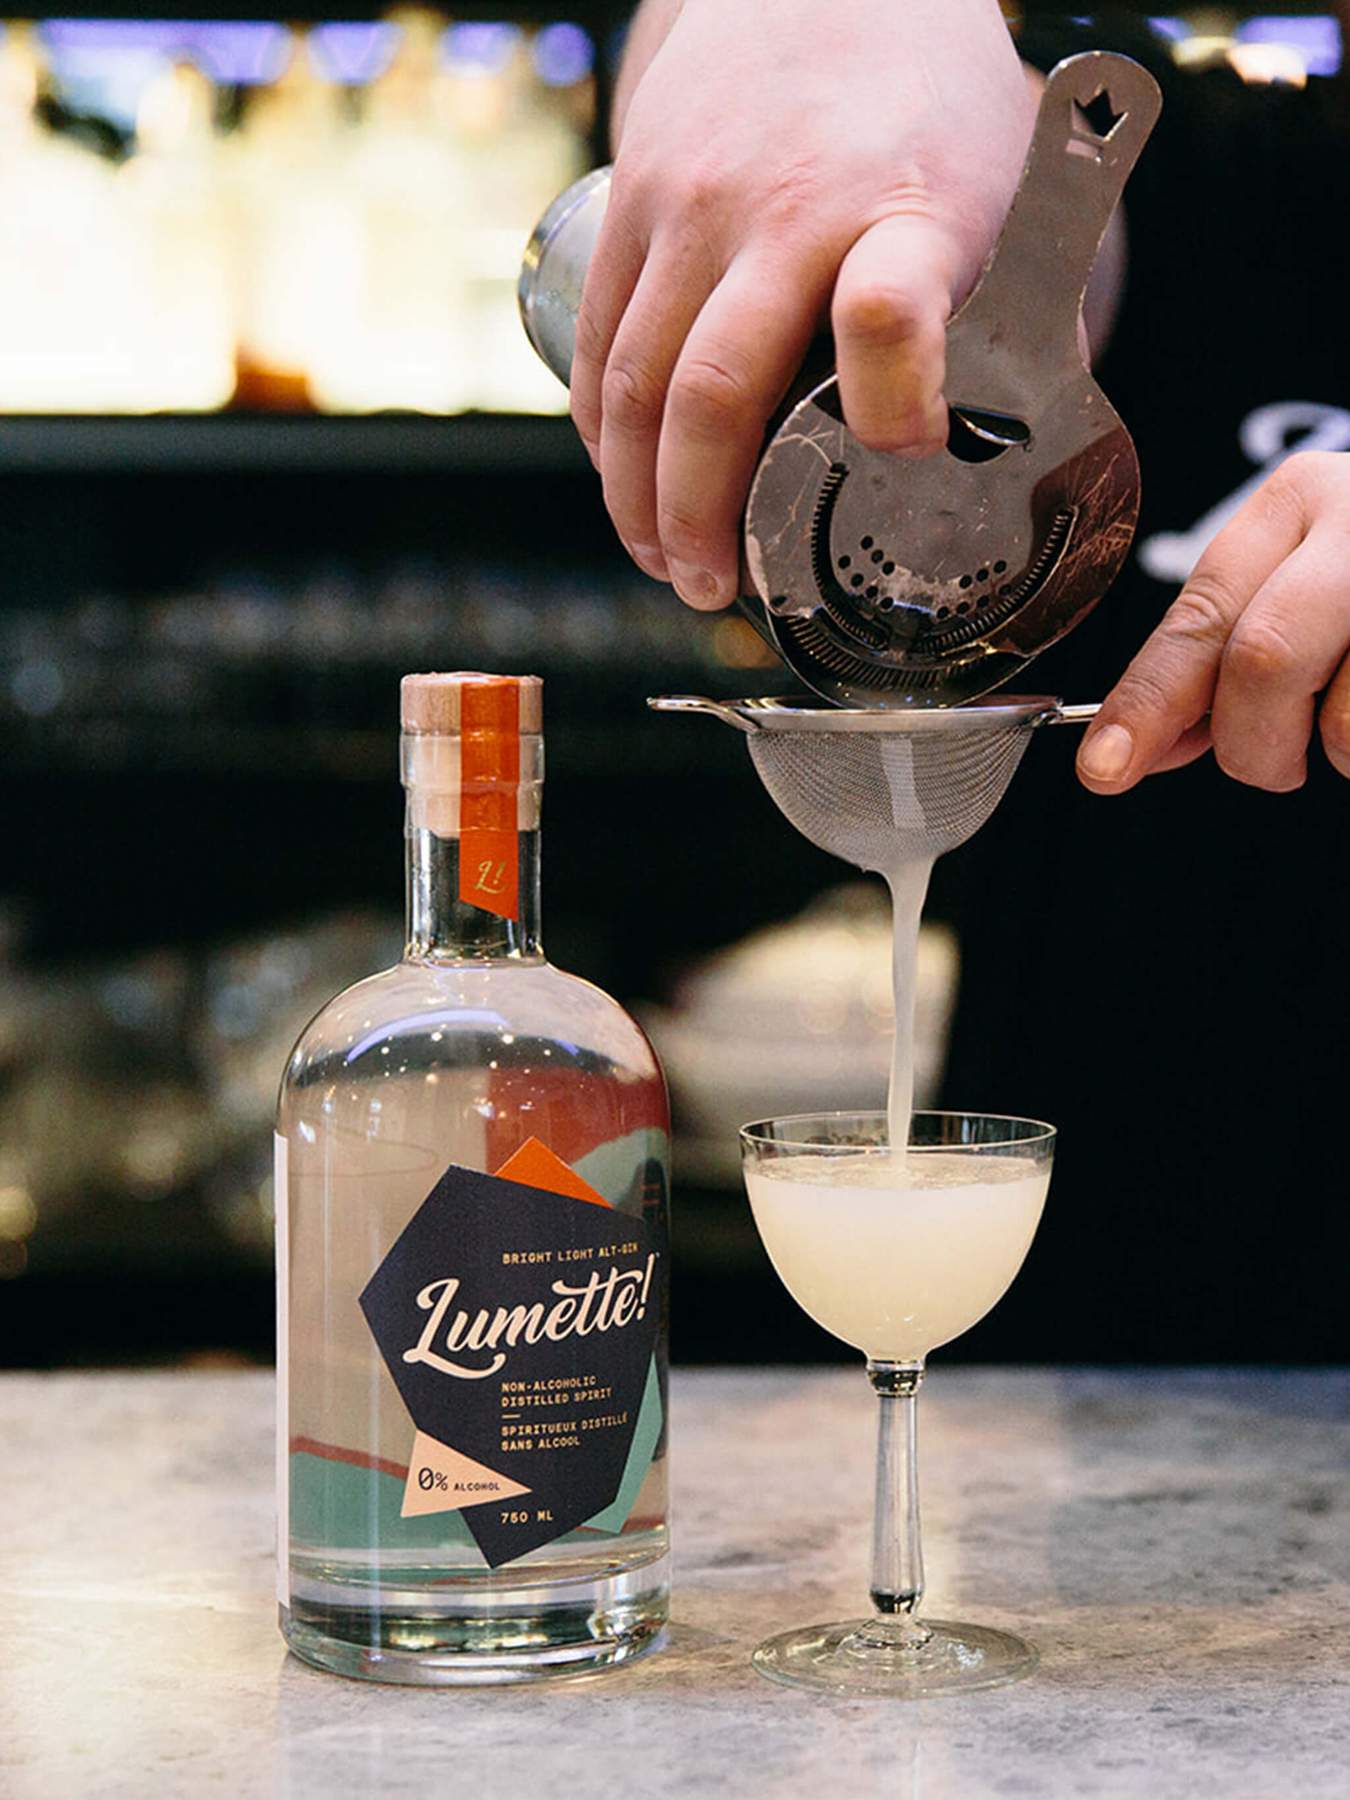 Lumette! - Bright Light Alt-Spirit (750 ml)